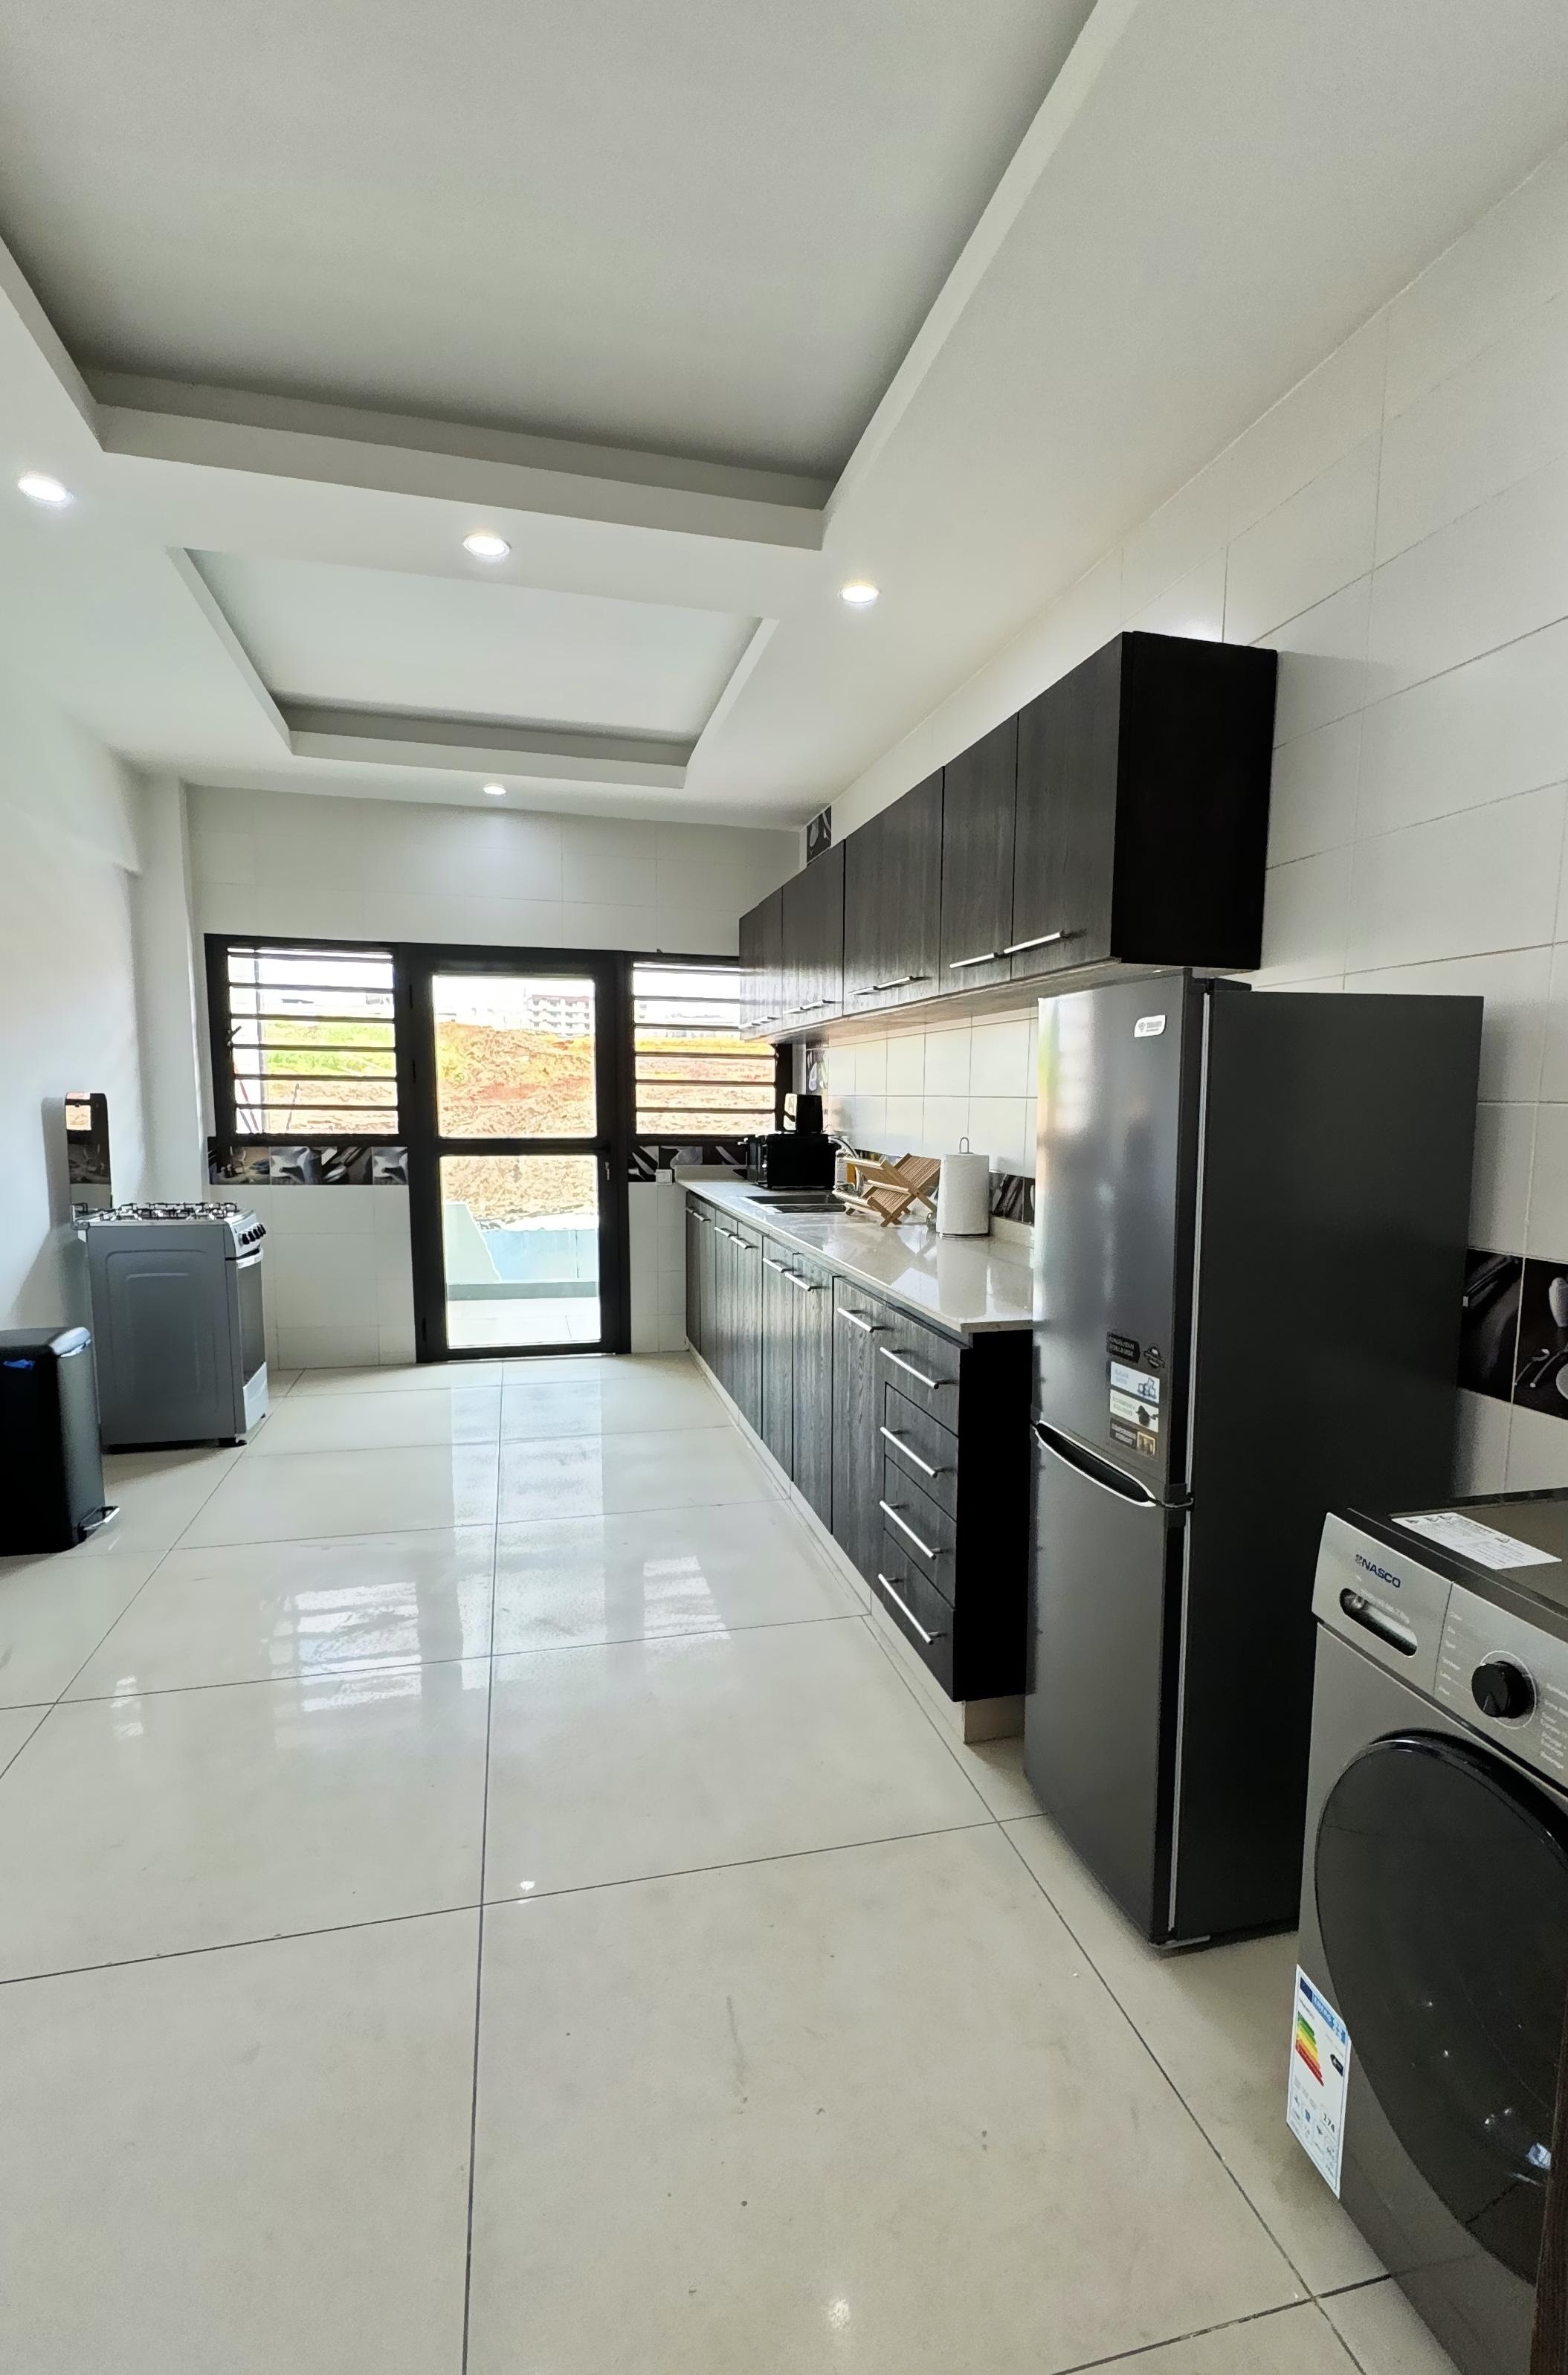 Location meublée d'un Appartement à 85.000 FCFA : Abidjan-Cocody-Riviera (Riviera triangle)